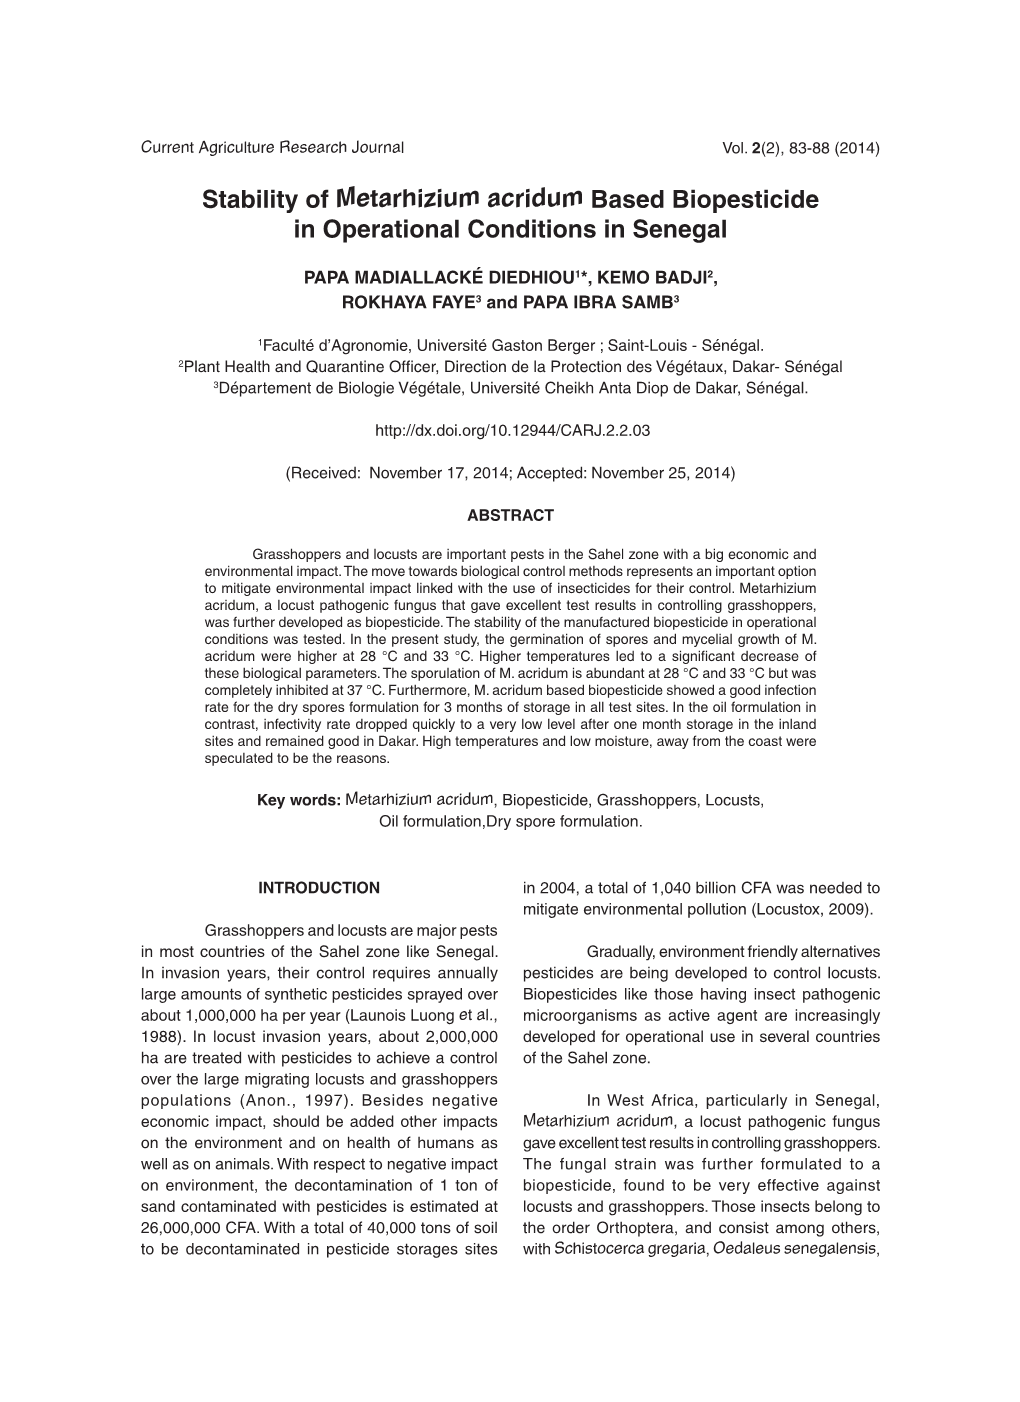 Stability of Metarhizium Acridum Based Biopesticide in Operational Conditions in Senegal